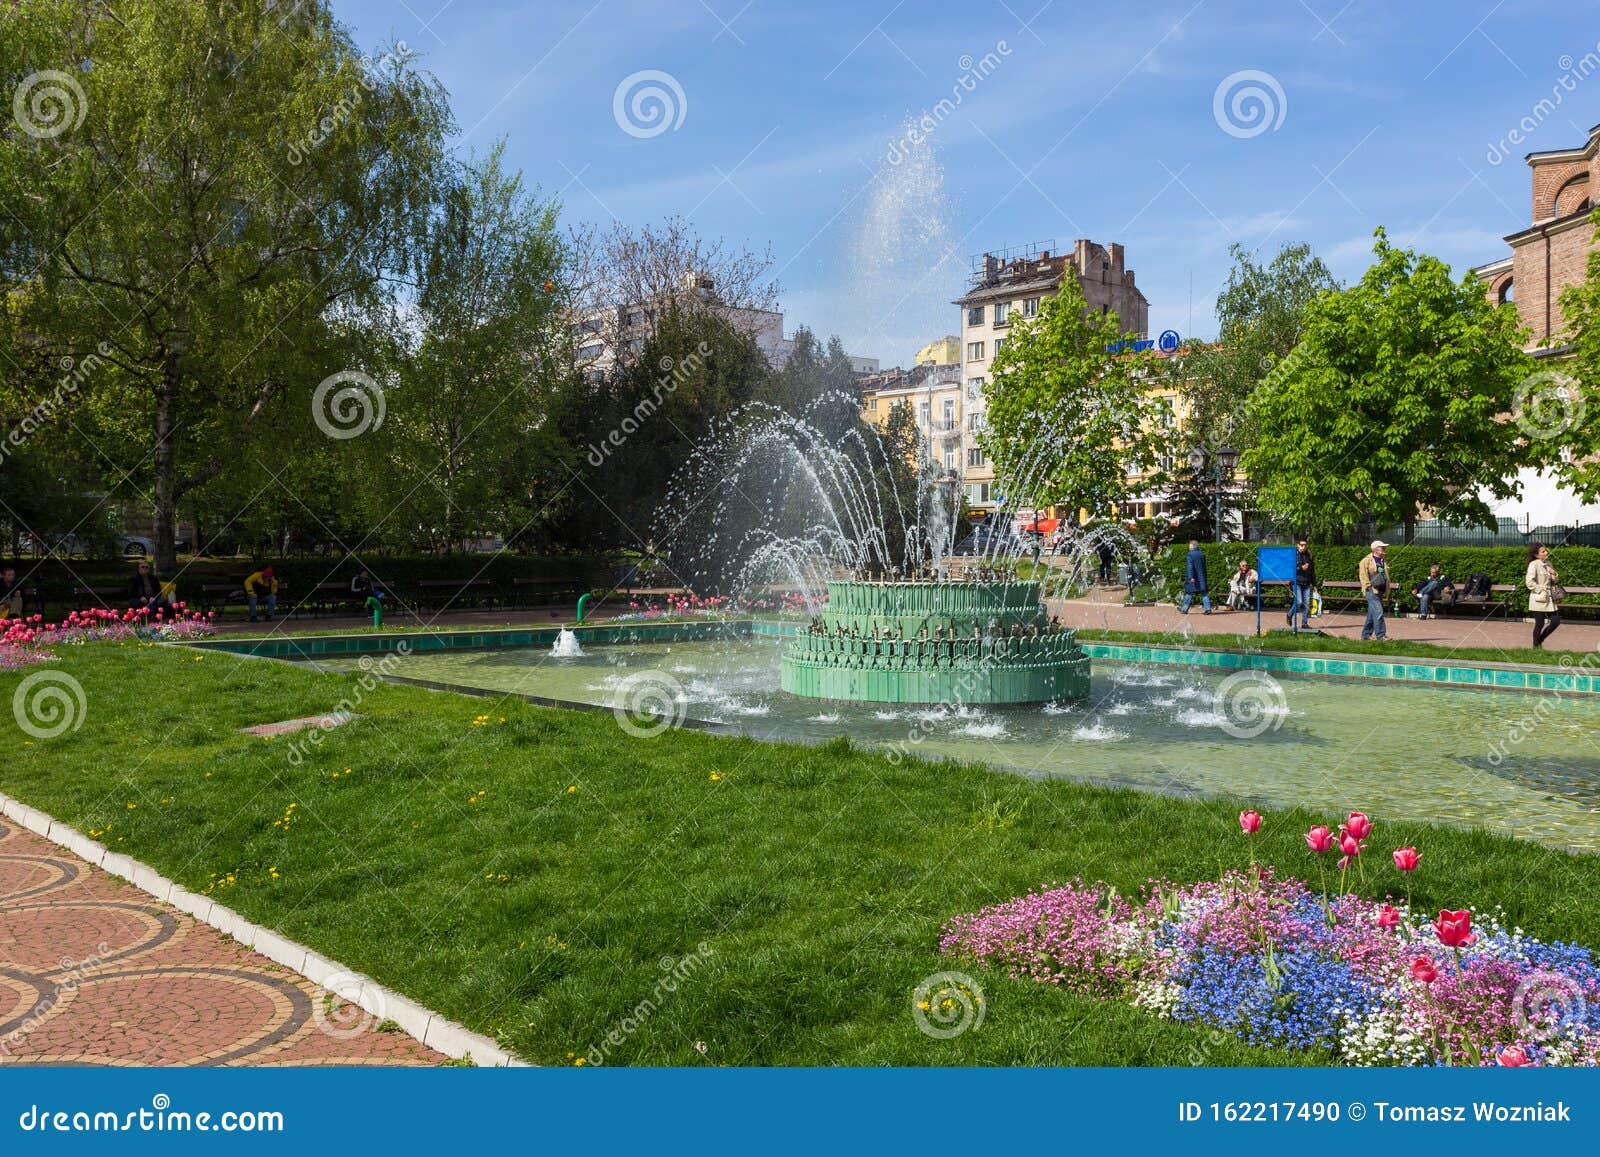 View Of The Fountain In The Garden Center Of Sofia Bulgaria